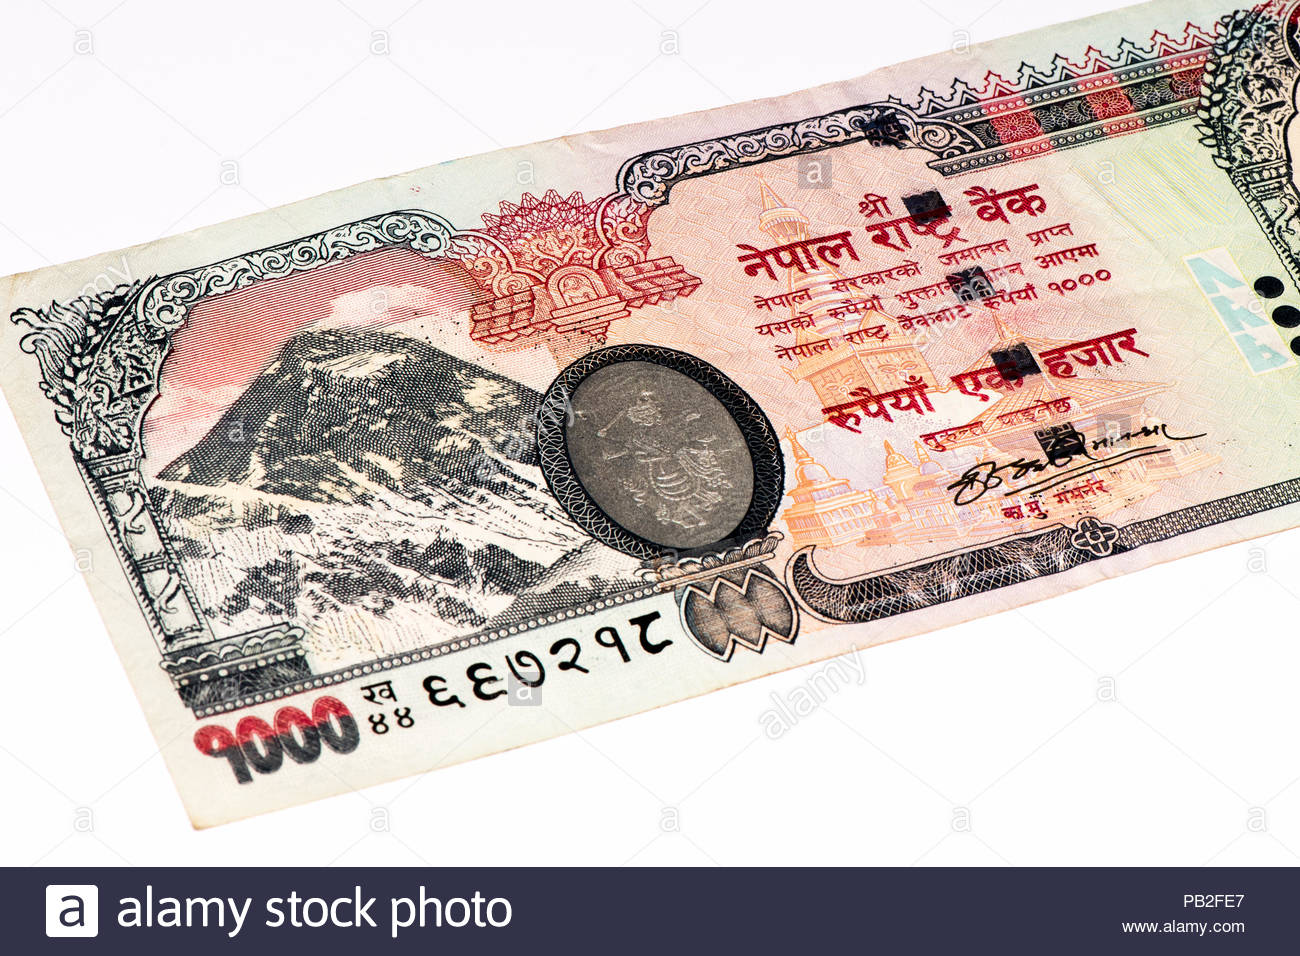 Tiền Nepal 1000 rupee